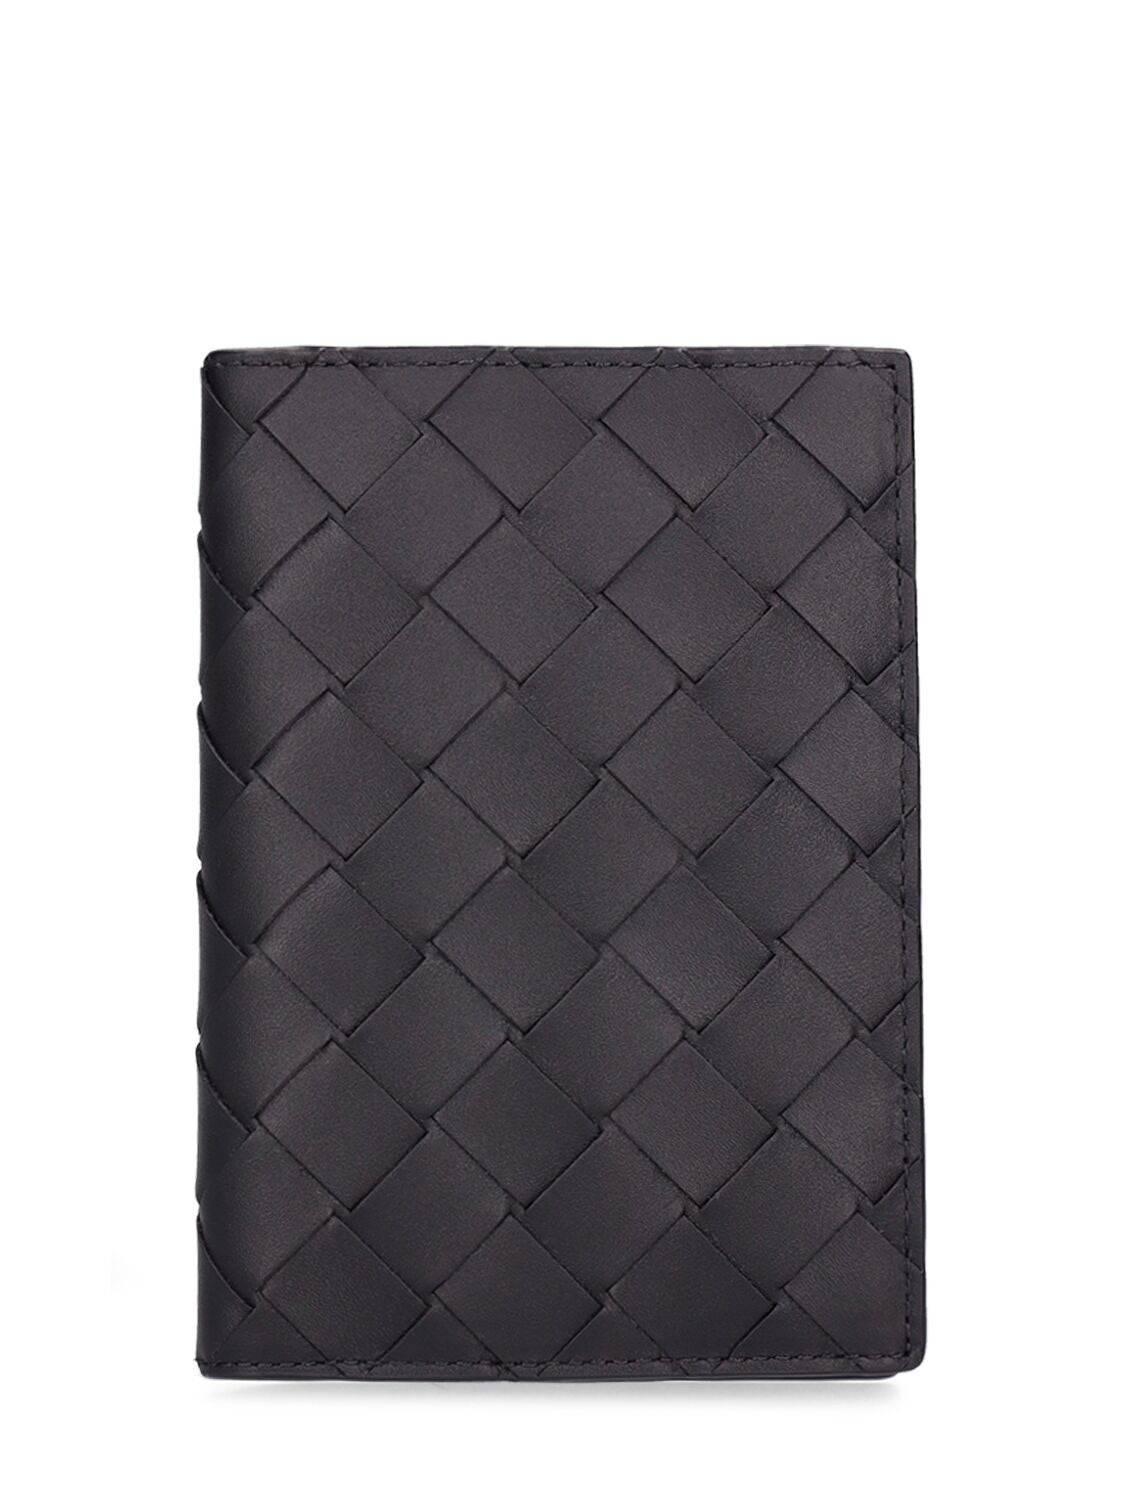 Bottega Veneta Intrecciato Leather Passport Case In Black